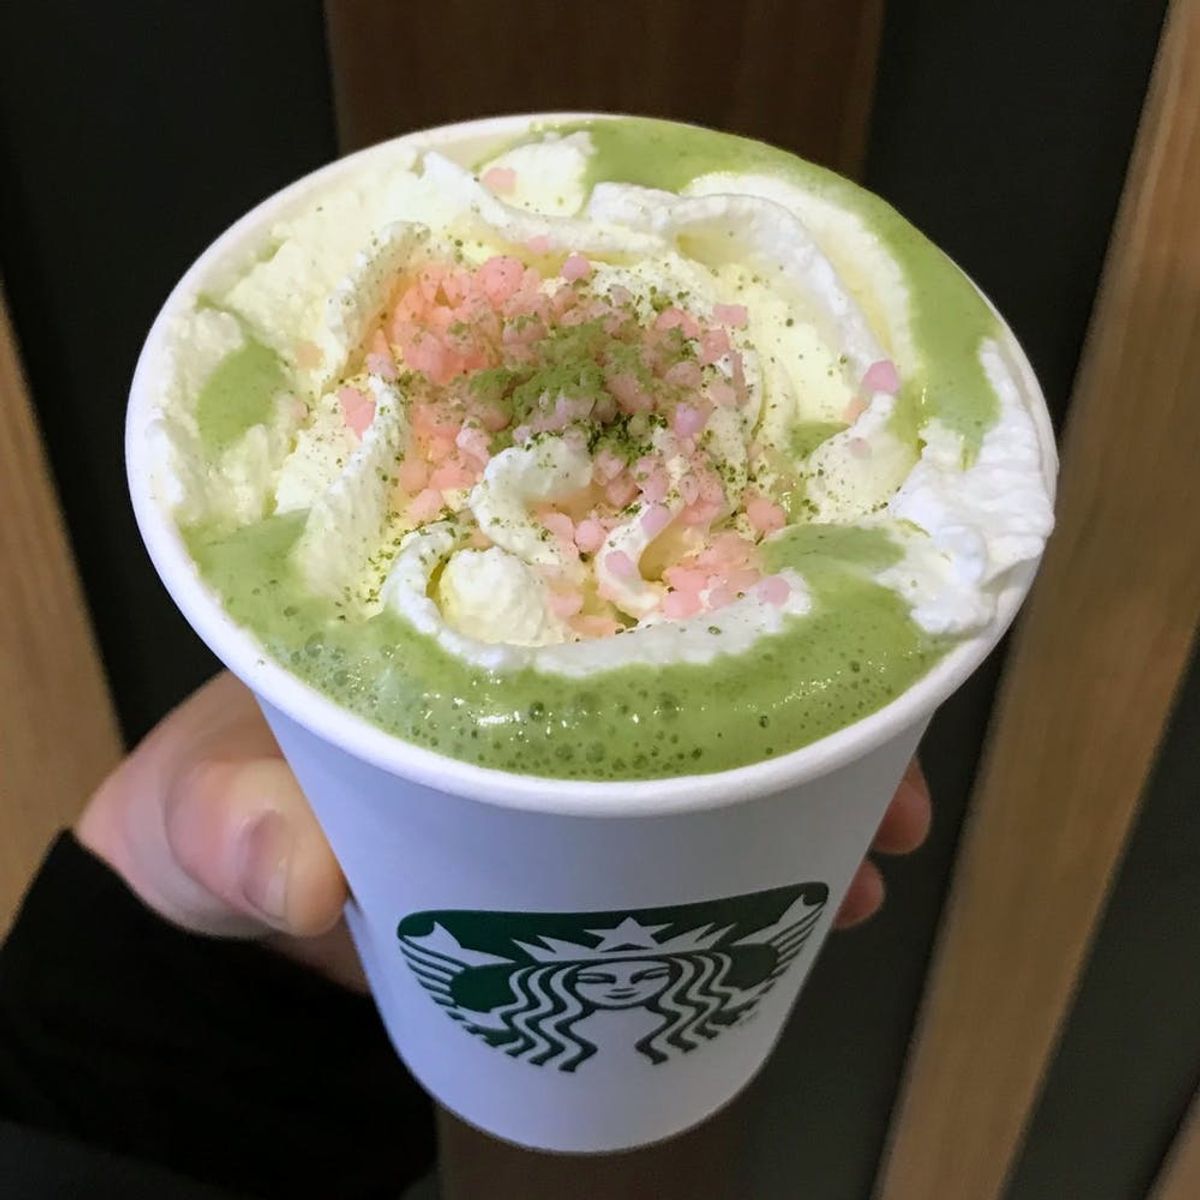 I Tried Starbucks’ New Peach Blossom Green Tea Latte in China